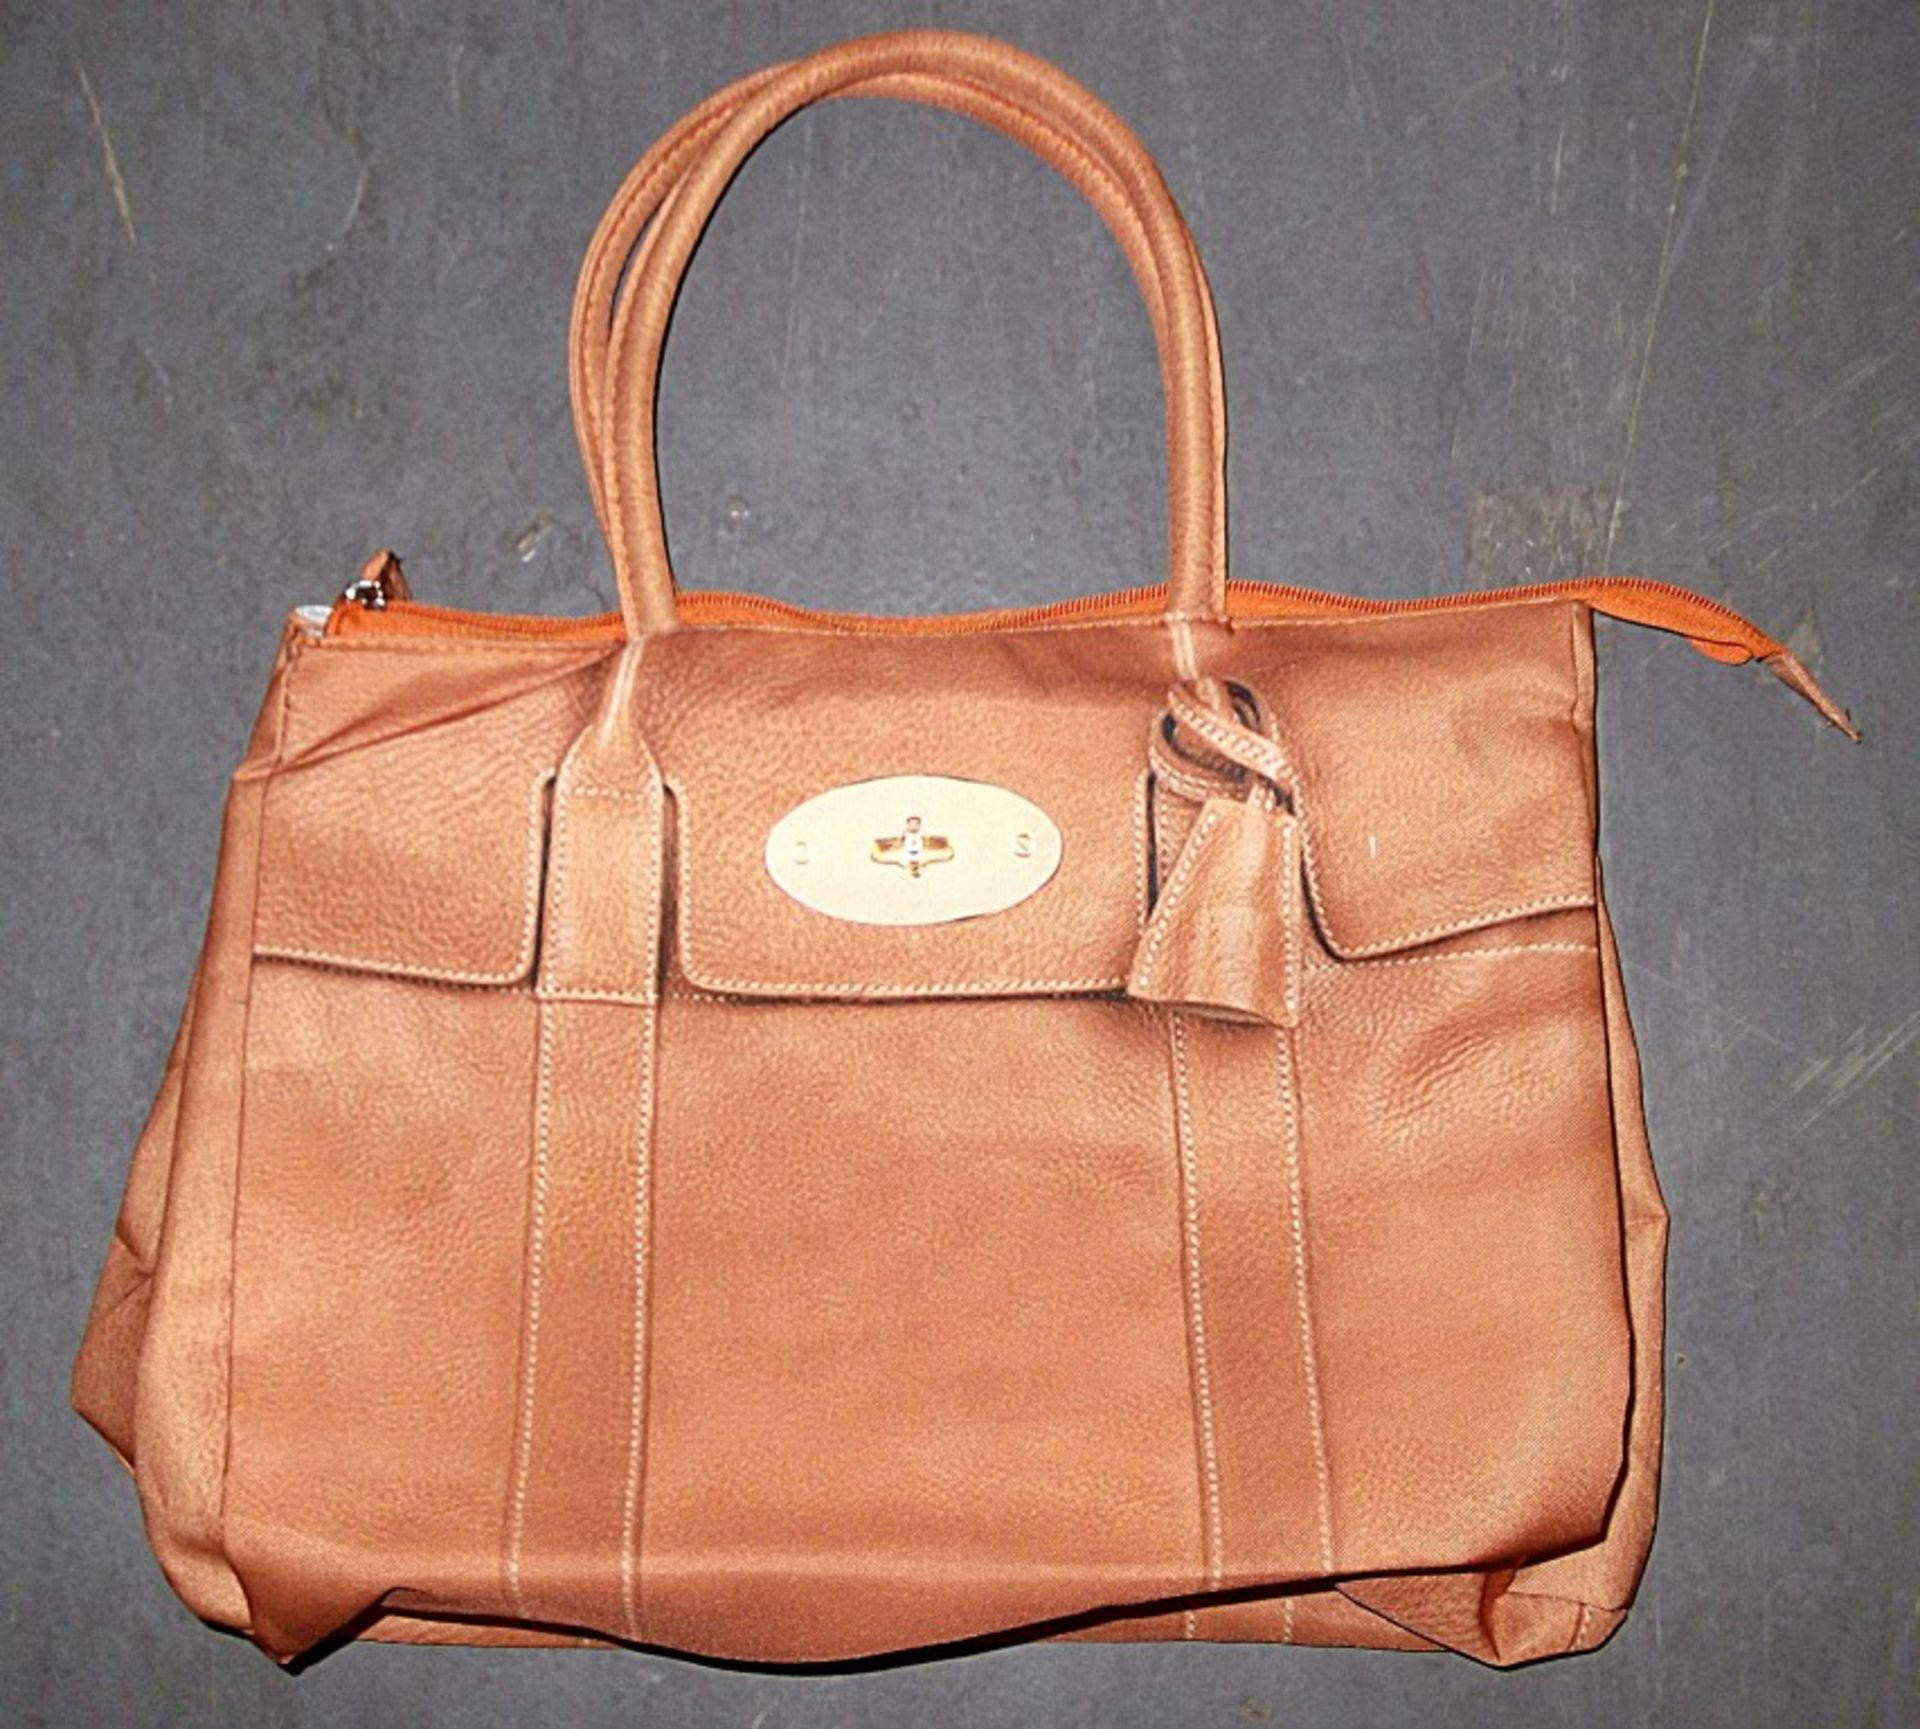 20 x Nylon Mulberry Style Handbags - Huge Resale Potential – NJB071 - CL008 - Location: Bury